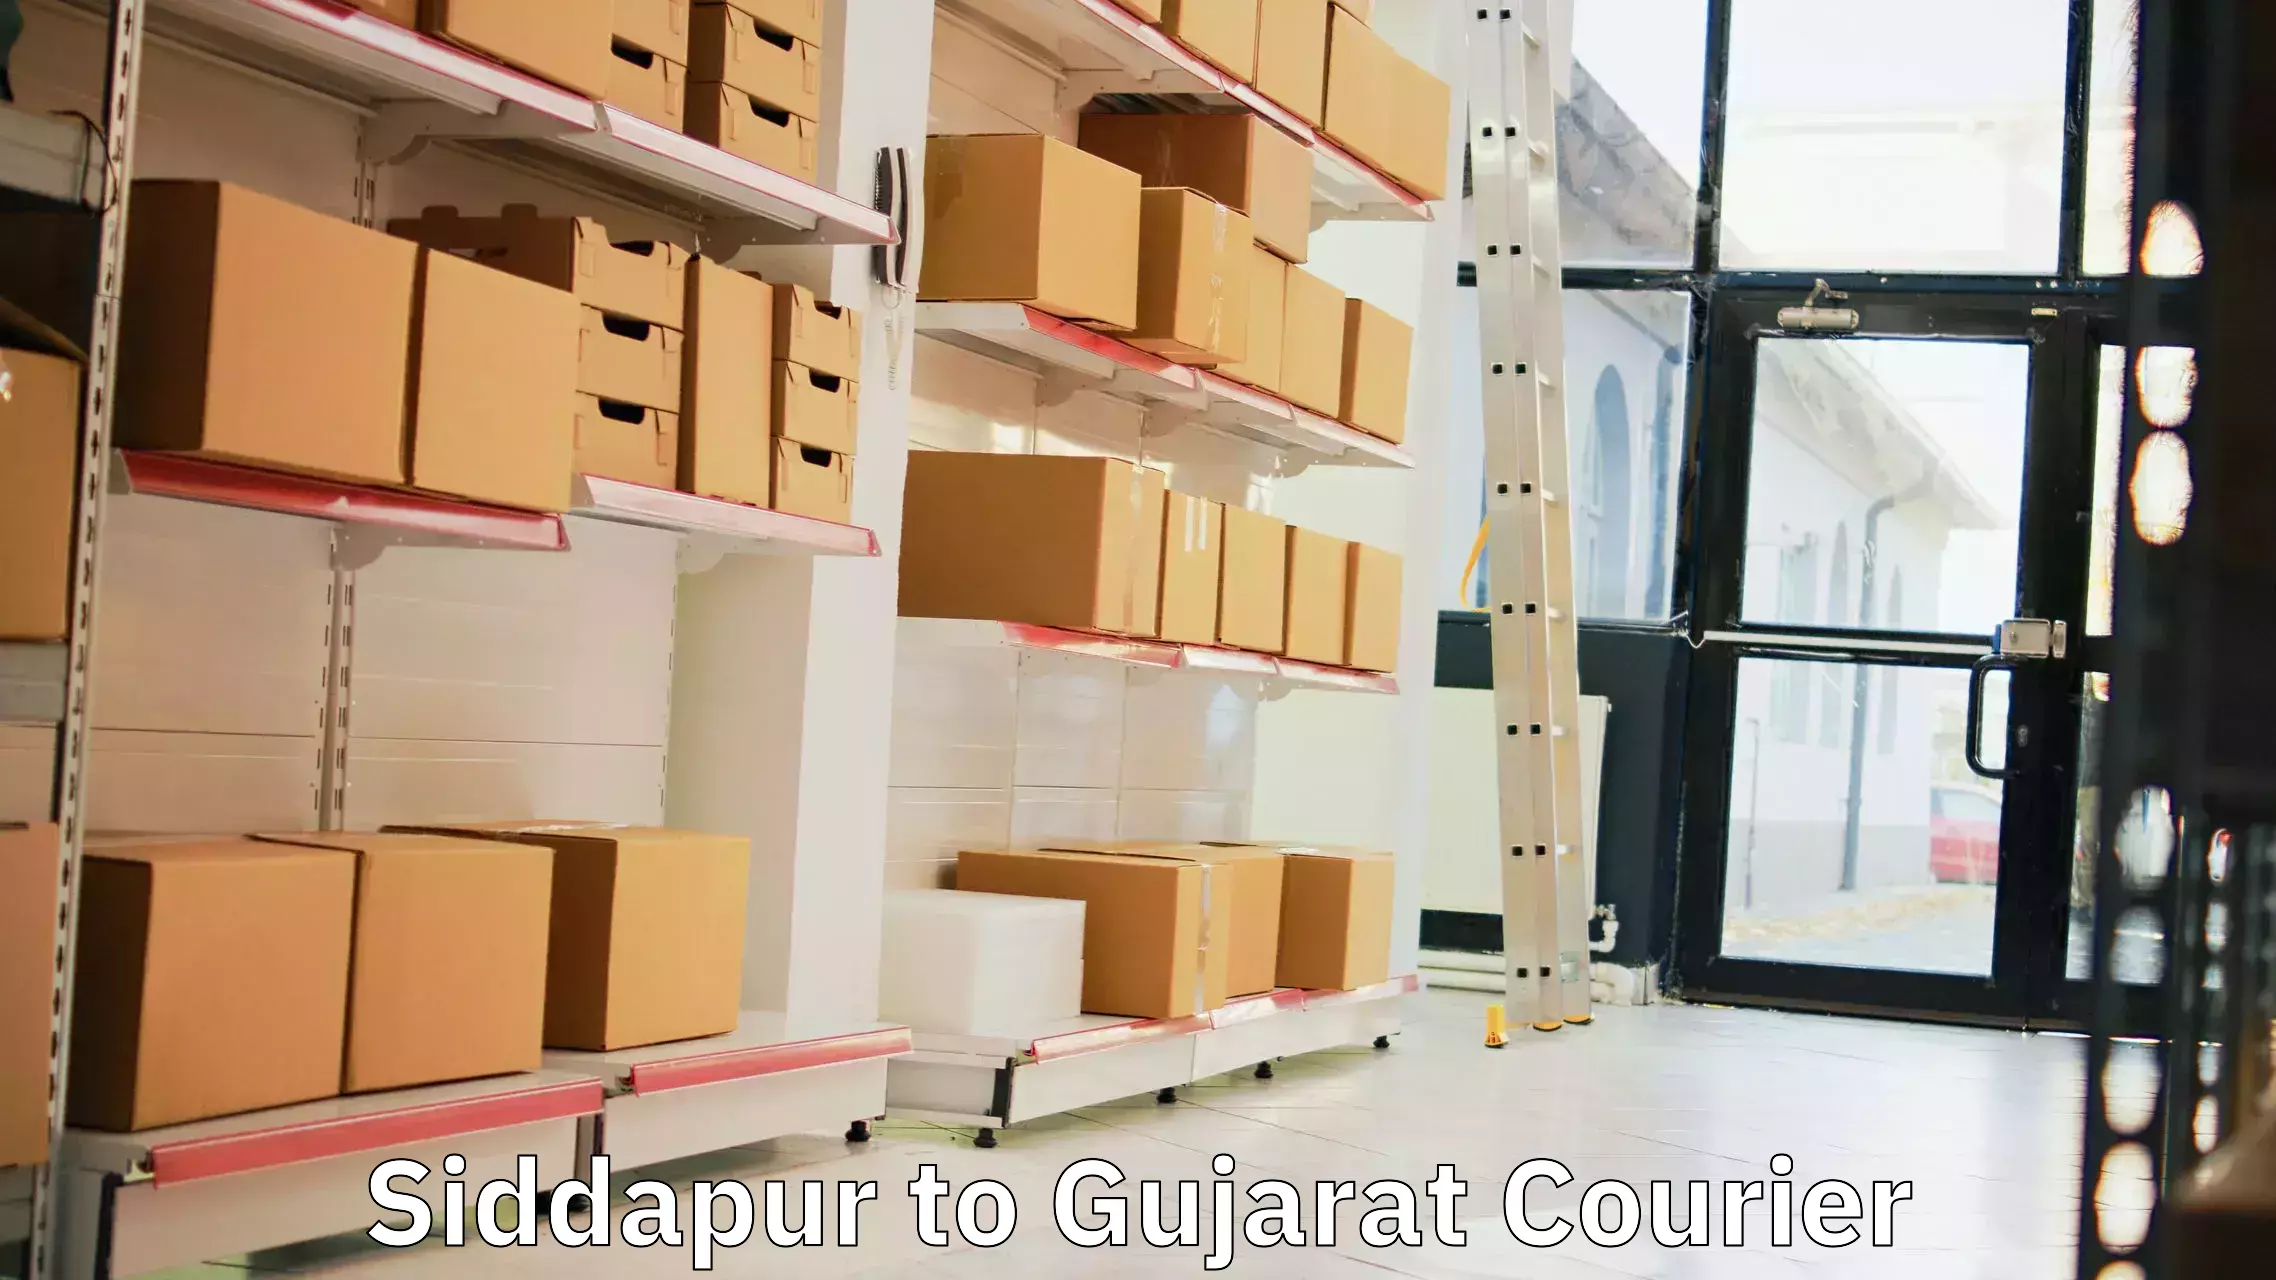 Courier service comparison Siddapur to Girgadhada